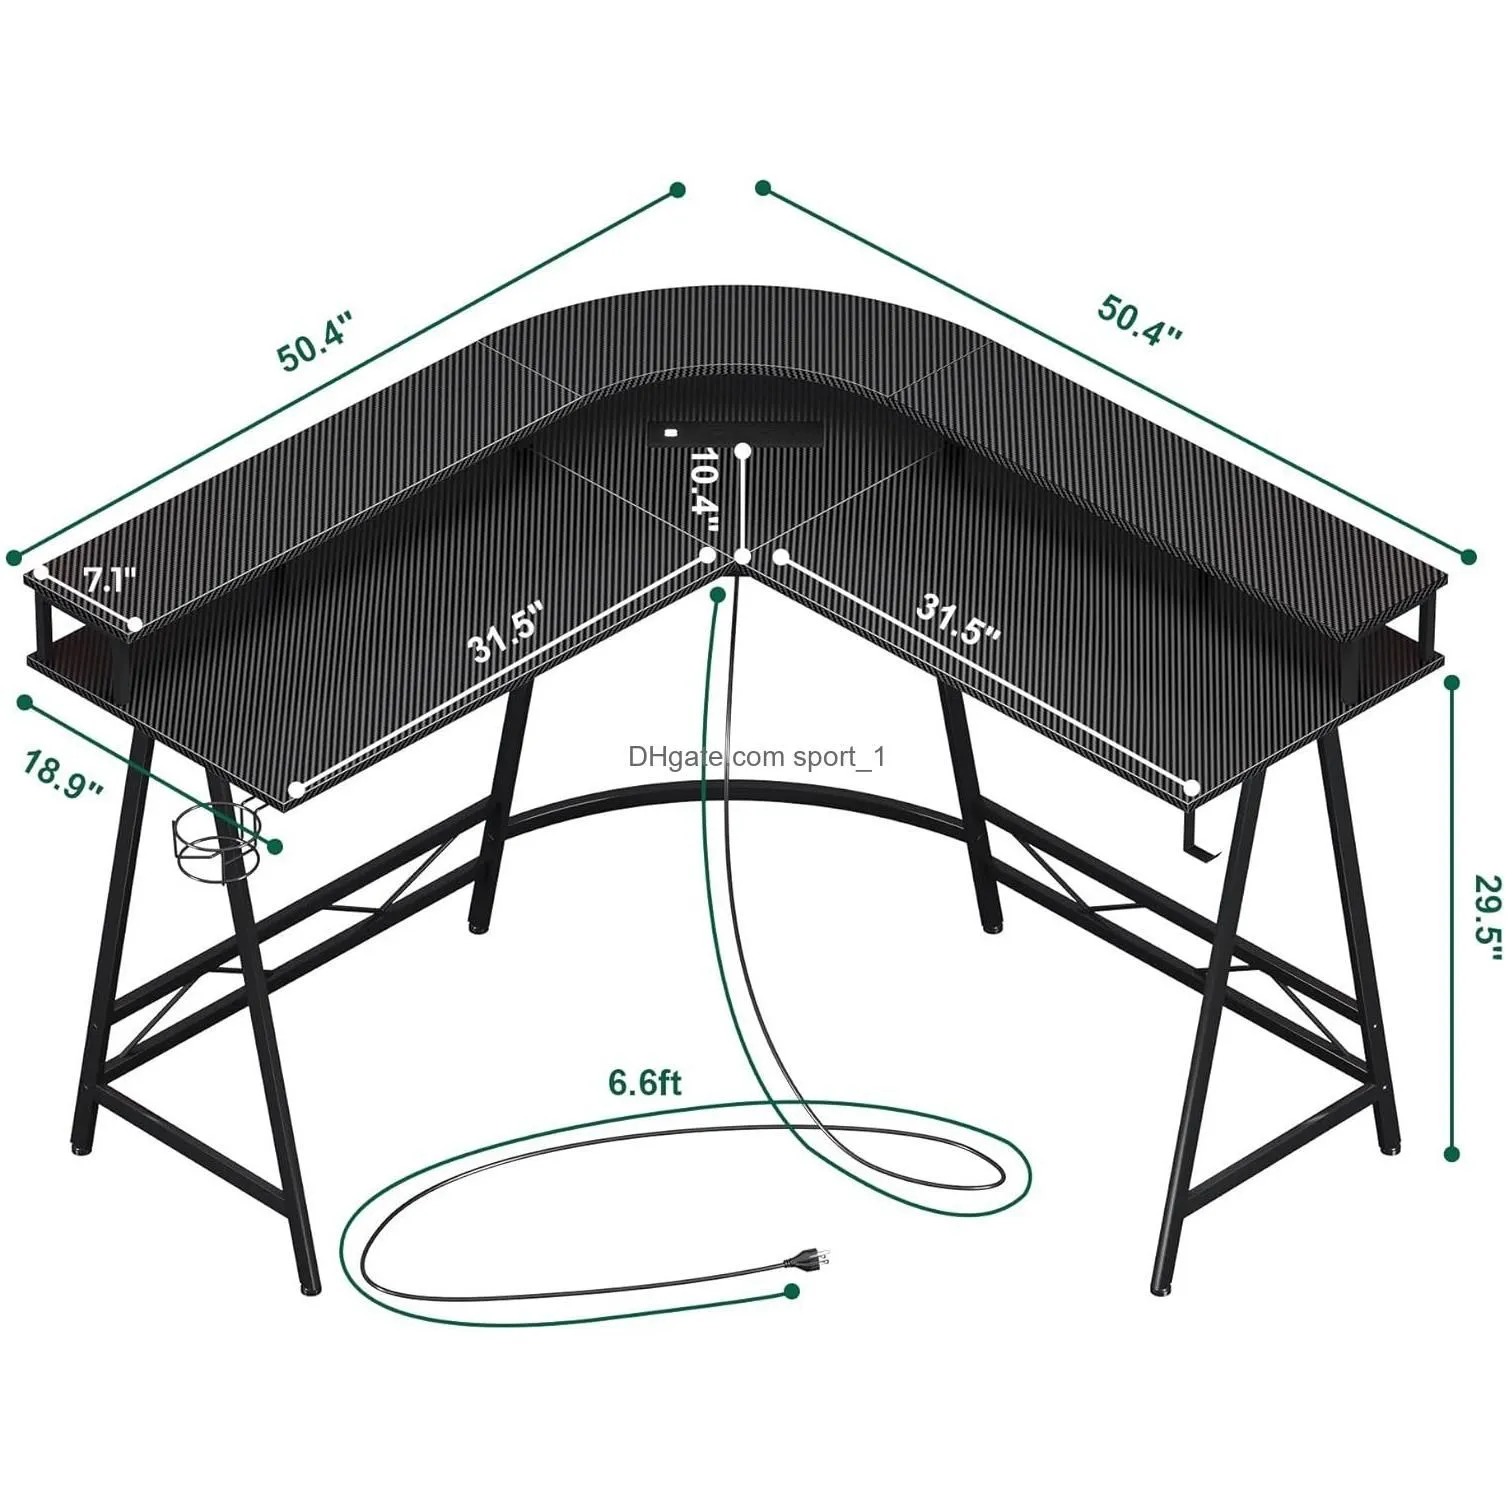 Bedroom Furniture Desk With Led Light And Power Outlet Family Corner Table Monitor Stand Cup Holder Hook Carbon Fiber Black Drop Del